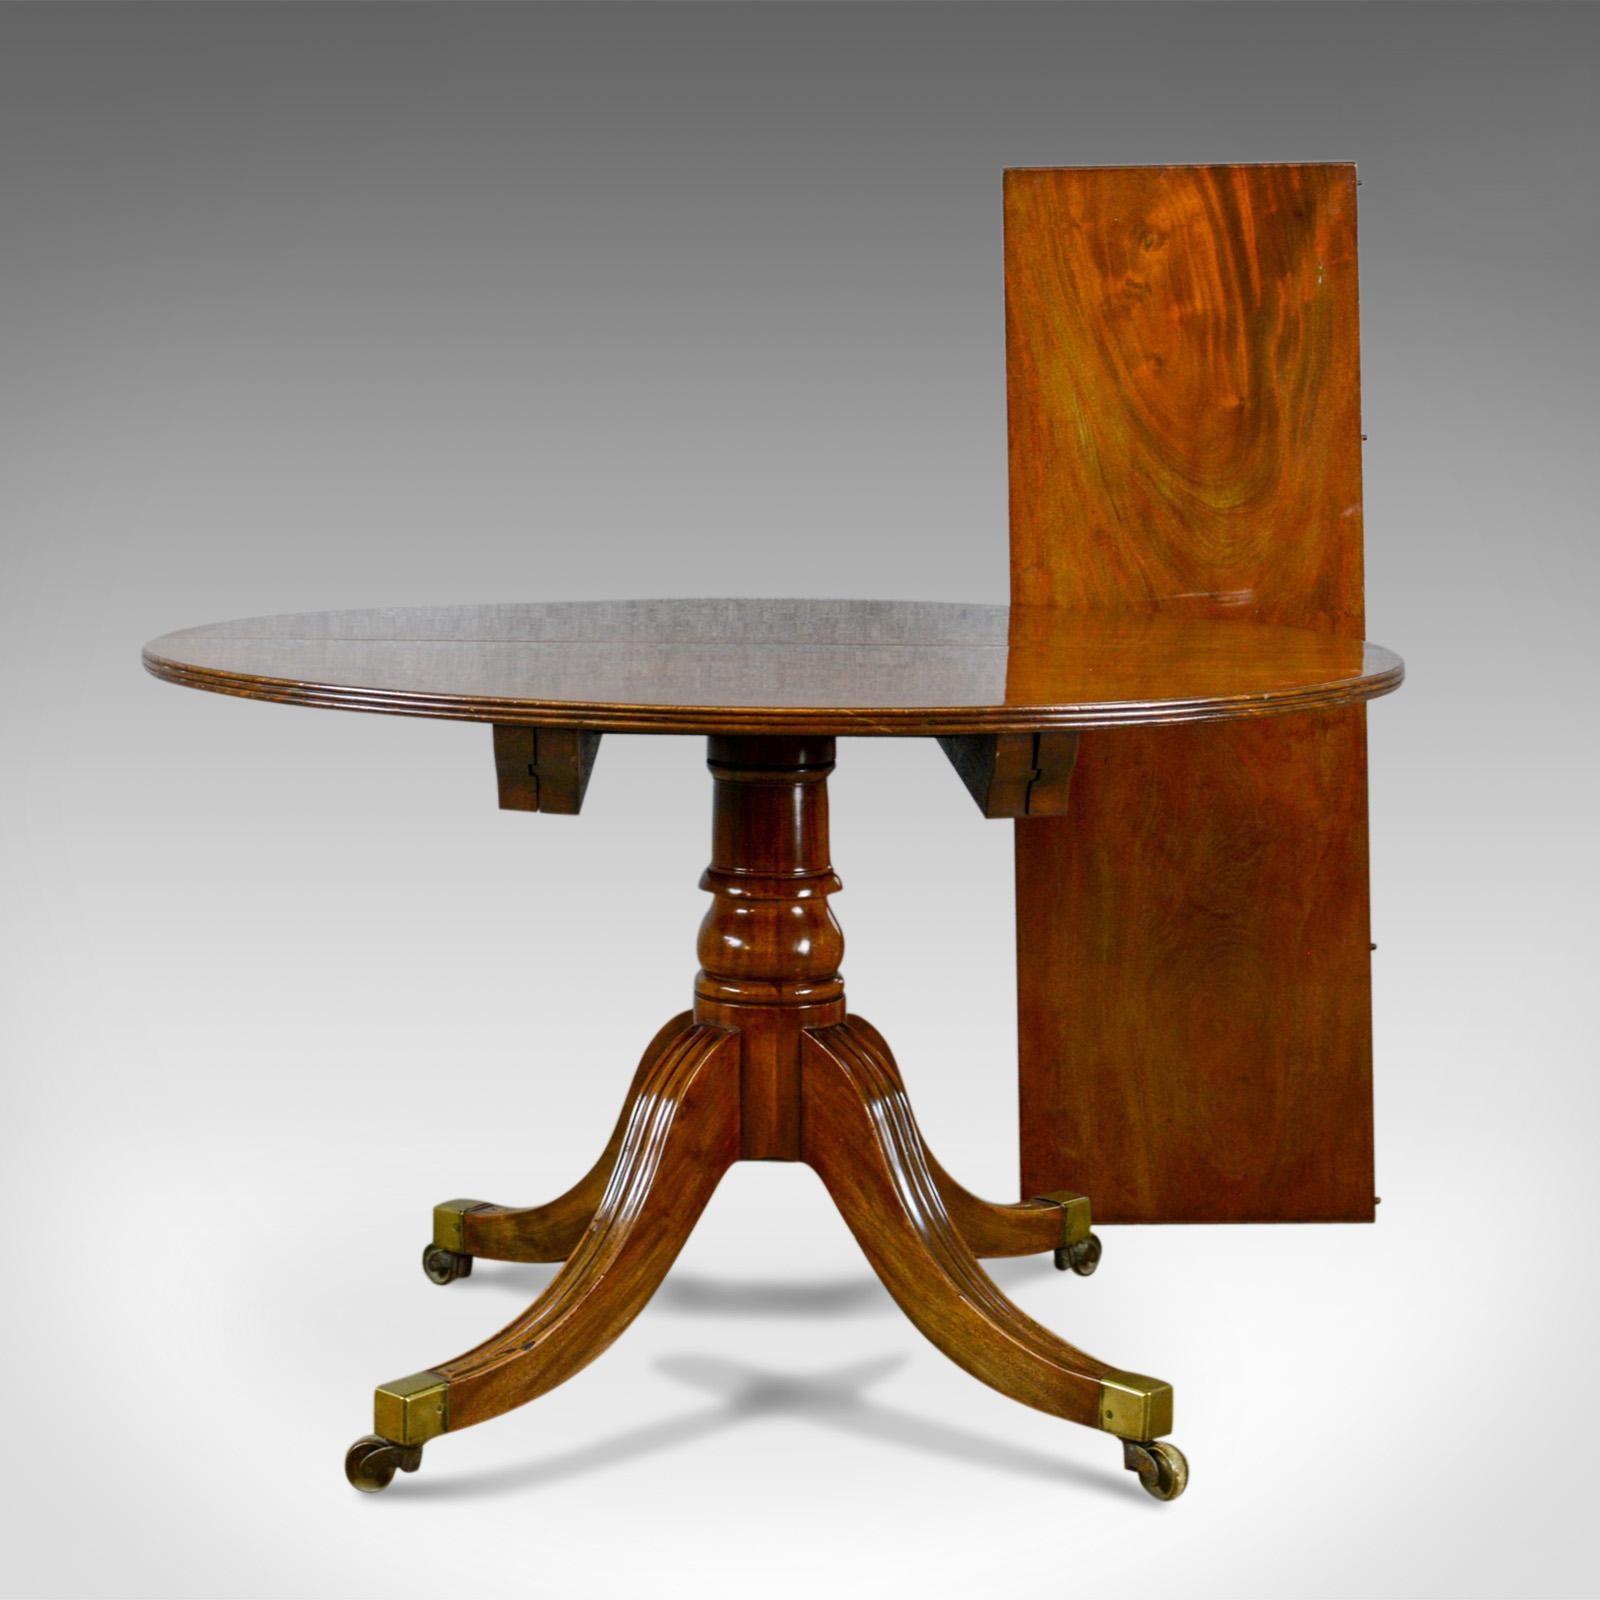 Antique Dining Table, English, Mahogany, Seats 4-6, Extending, Regency 2